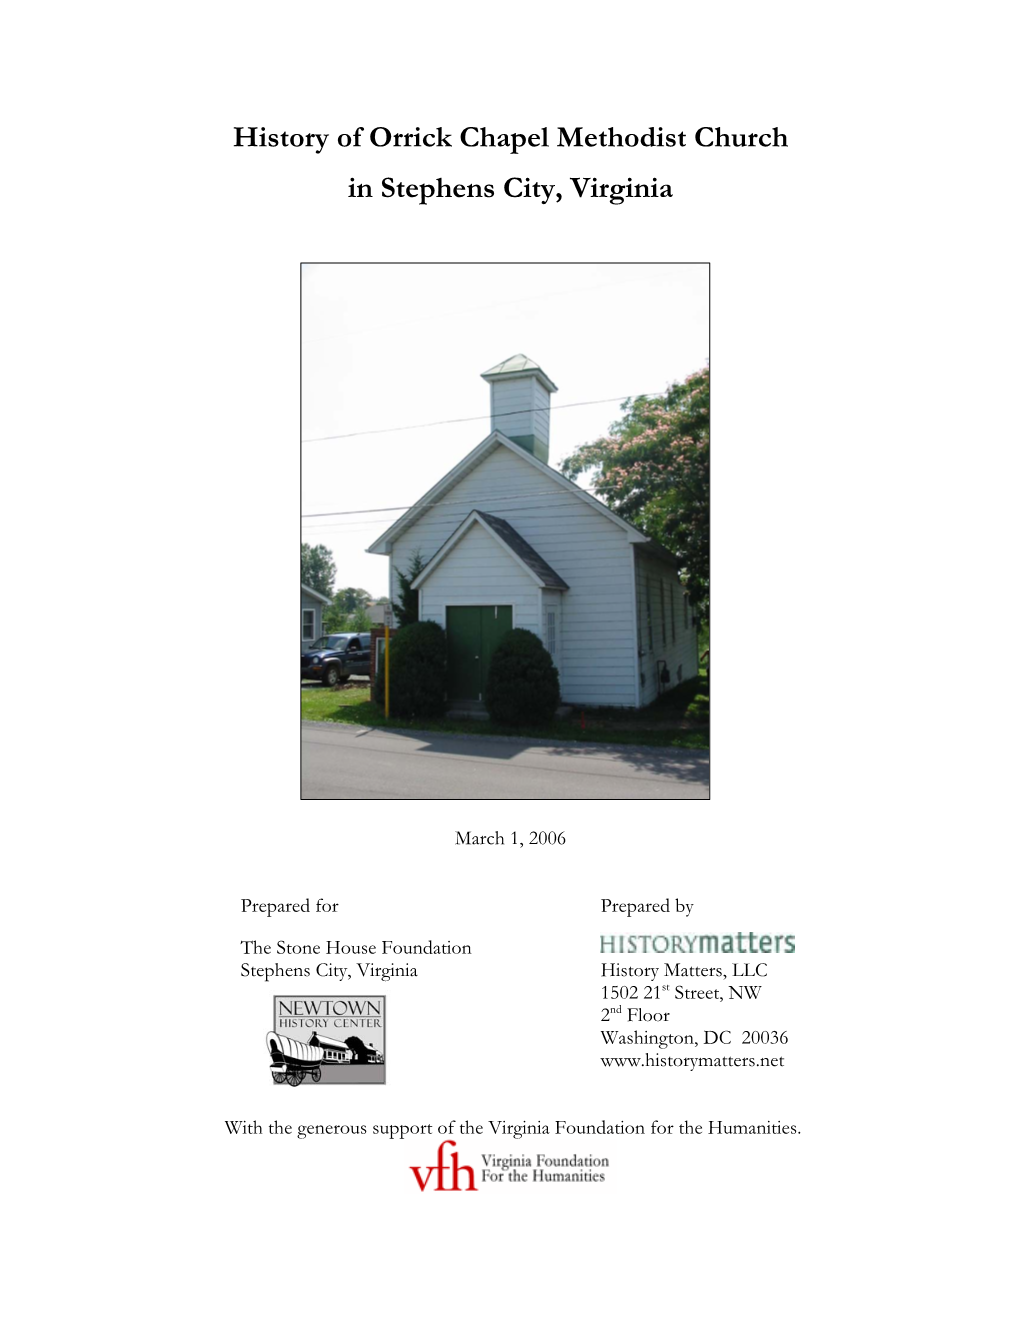 History of Orrick Chapel Methodist Church in Stephens City, Virginia